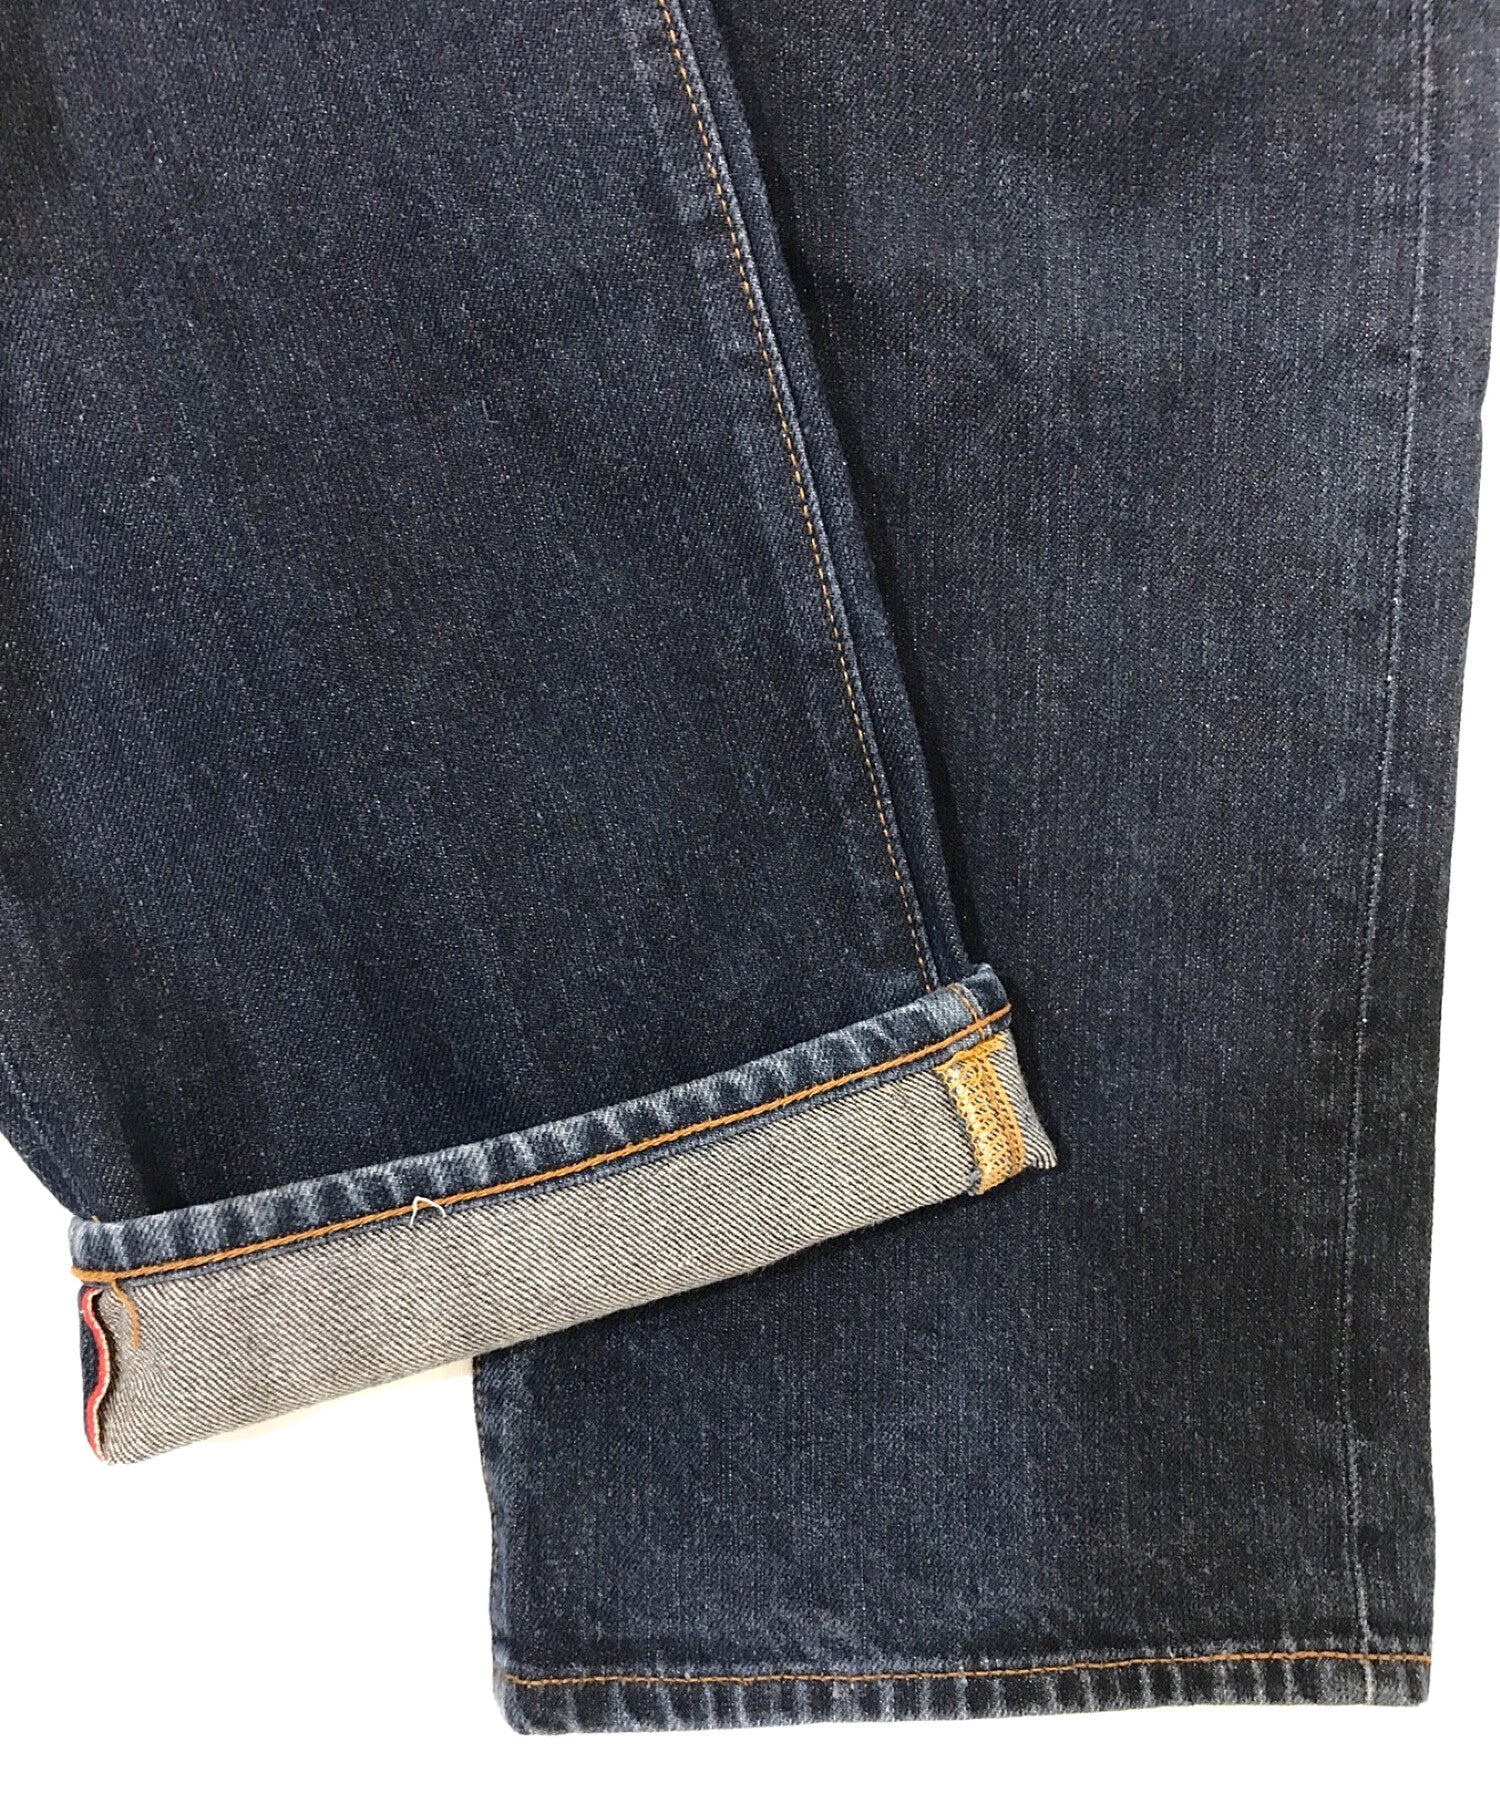 EVISU Denim Pants With Embroidered Pockets 20th anniversary